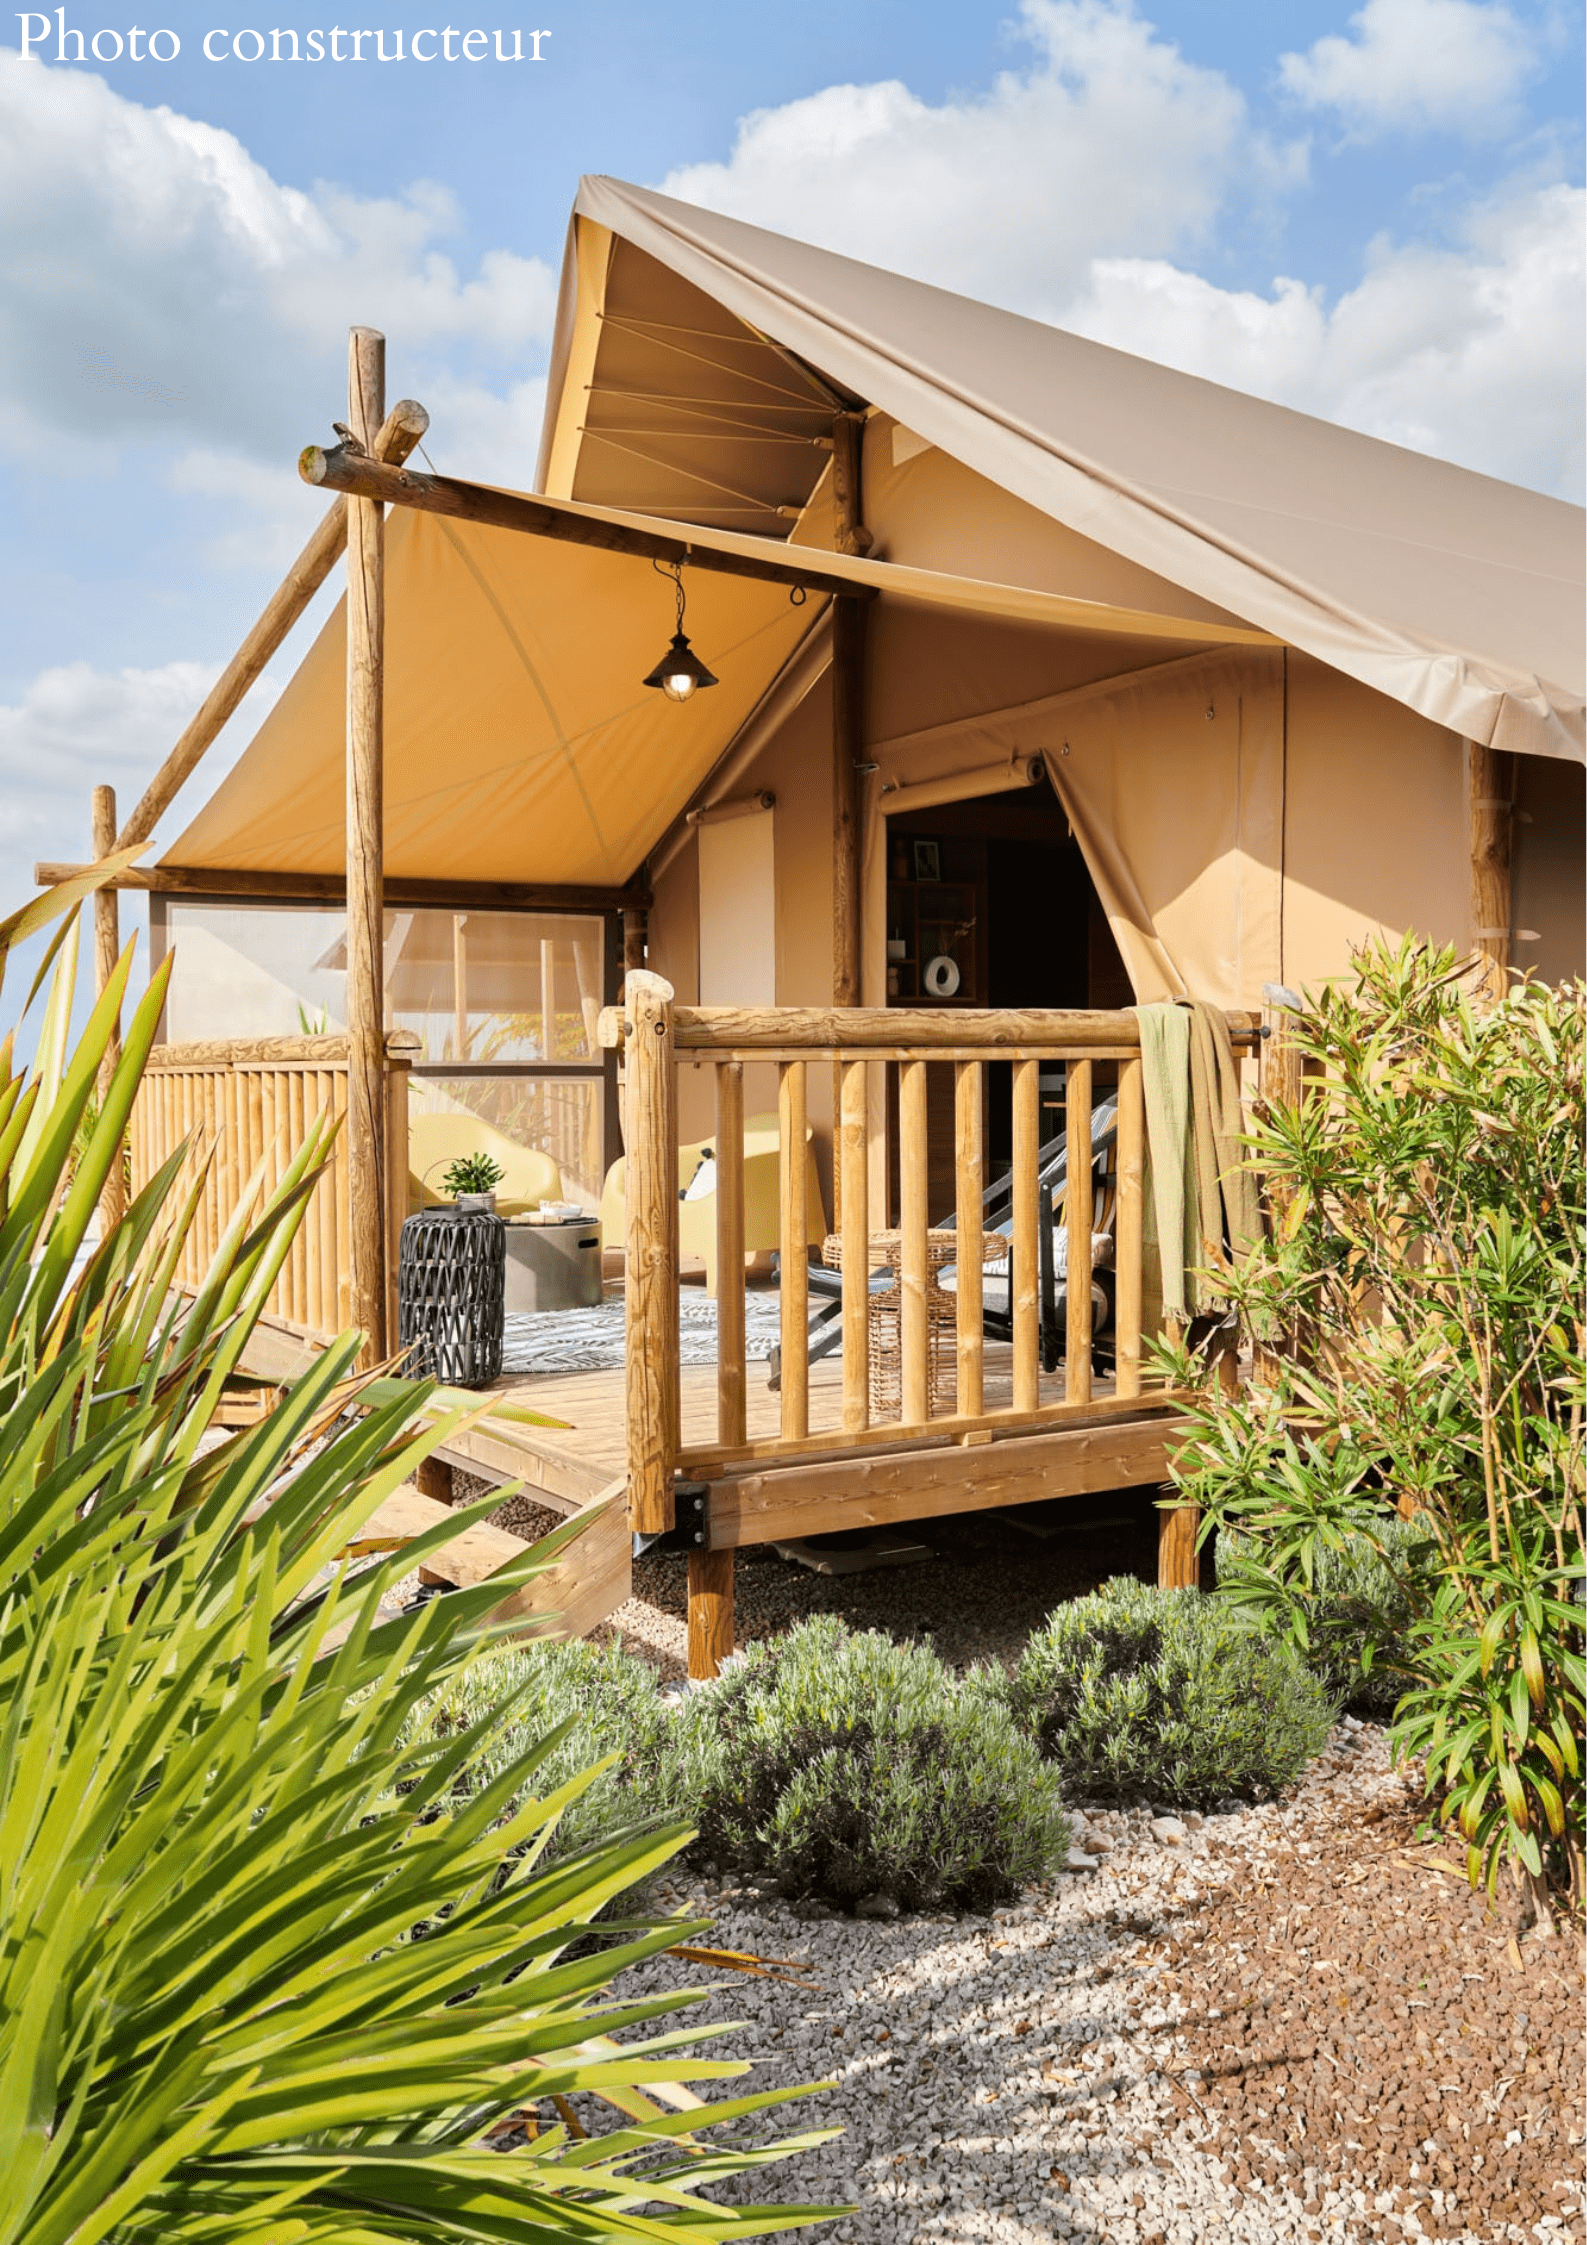 Accommodation - Safari Lodge - 2 Bedrooms : 26M² - Semi-Covered Terrace M² 4 Pers. - Airotel Camping La Roseraie